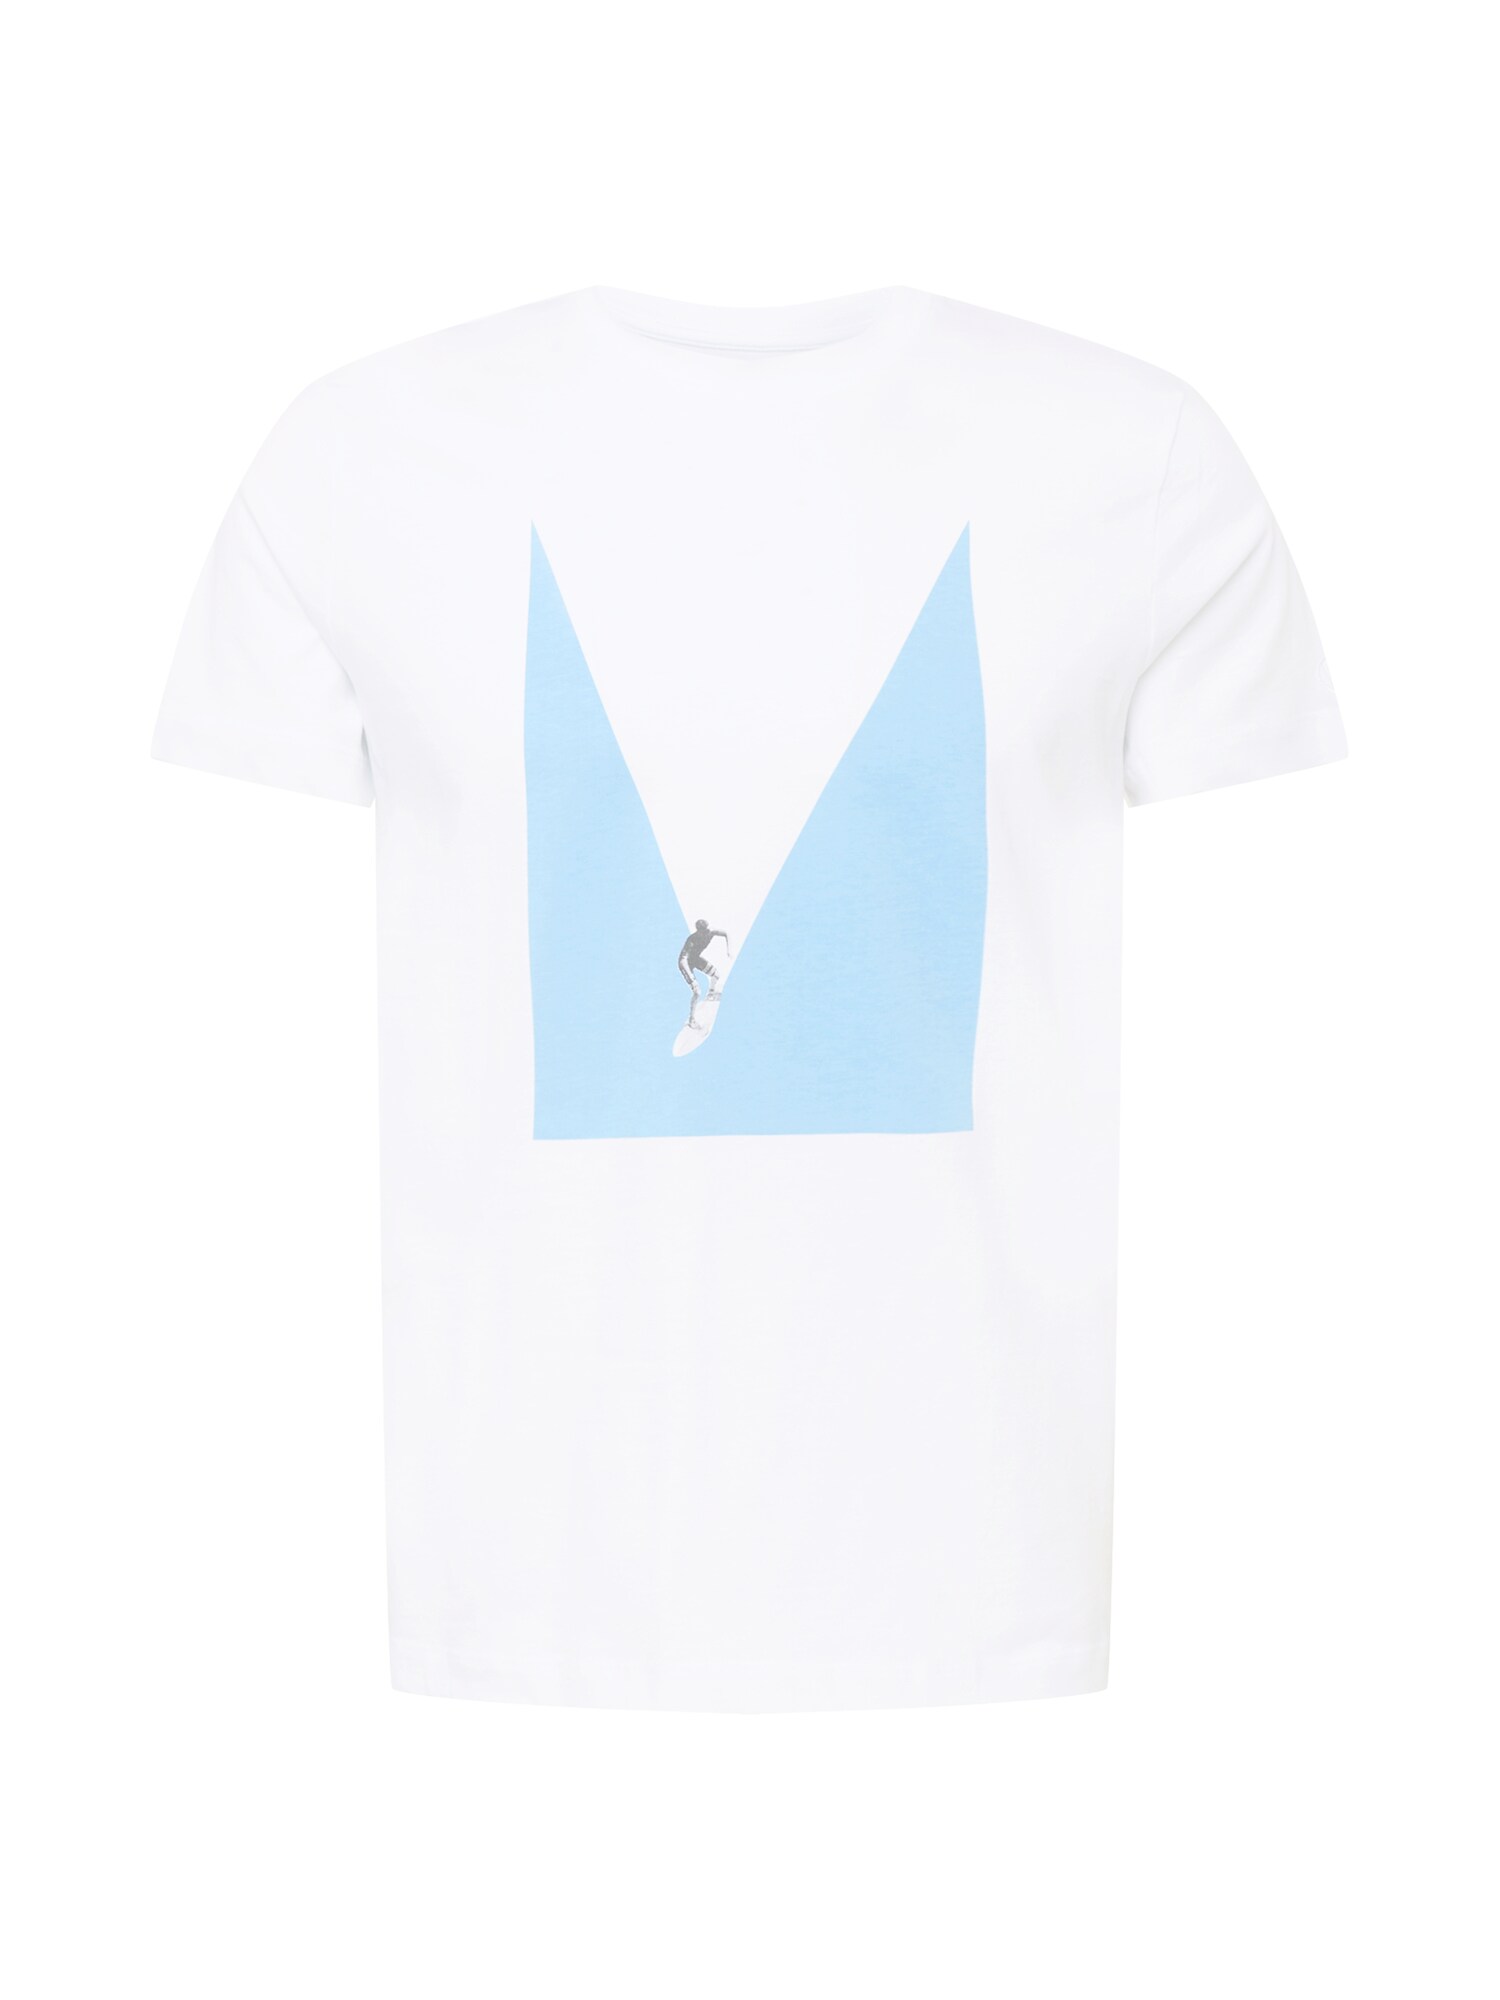 WESTMARK LONDON Marškinėliai 'WAKEBOARD' balta / šviesiai mėlyna / pilka